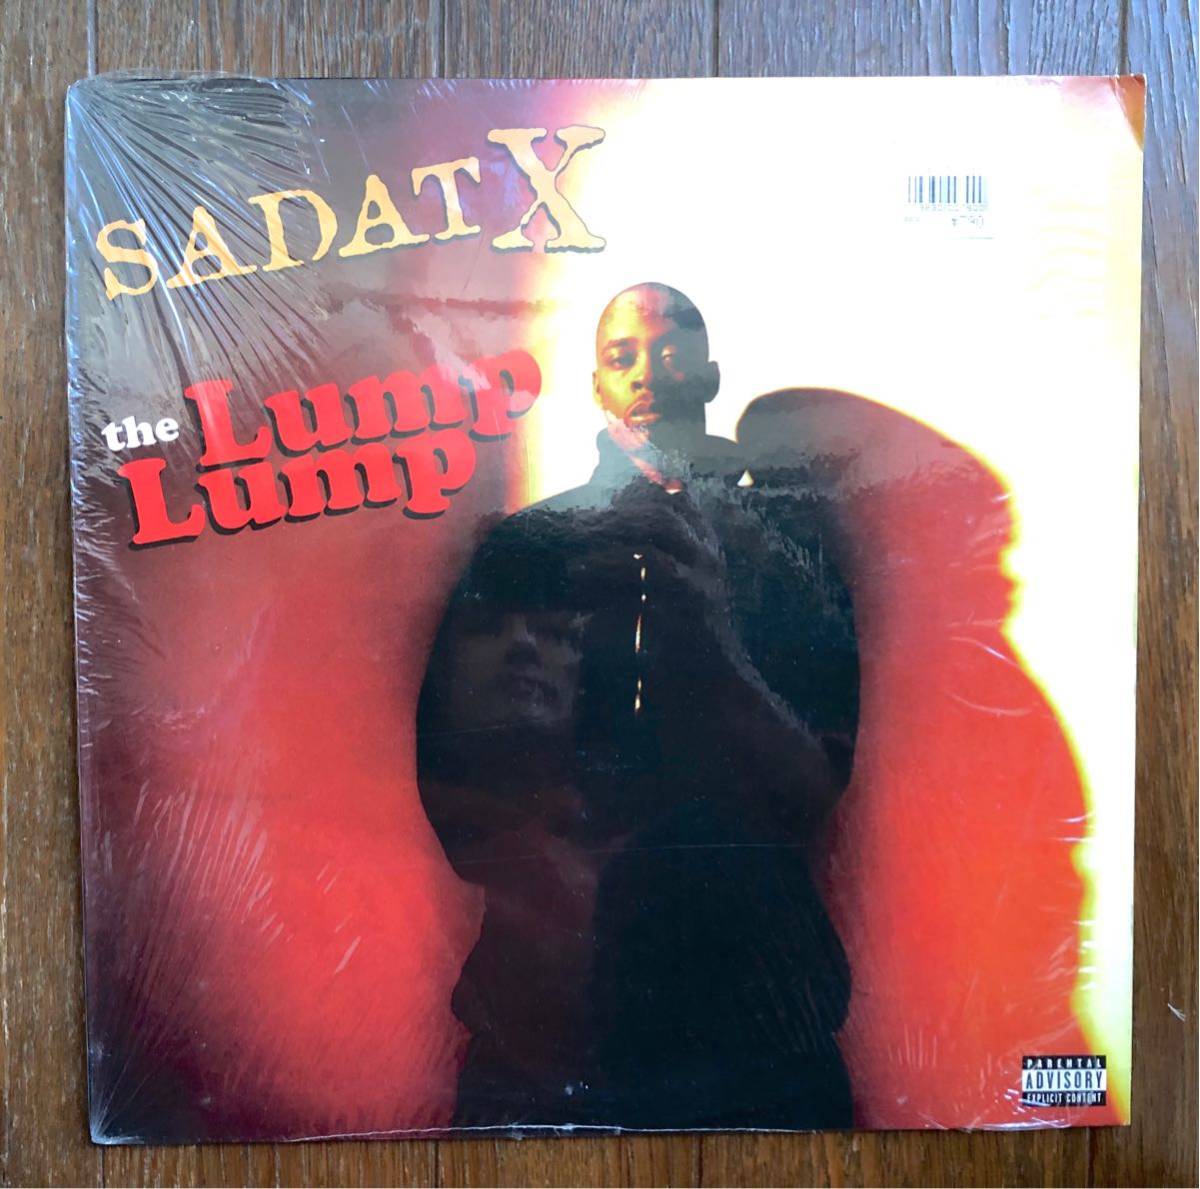 1996 Sadat X / The Lump Lump サダト エックス Pro Buck Wild Remix Featuring Grand Puba Lord Jamar Brand Nubian 90s ミドル 絶版_画像1